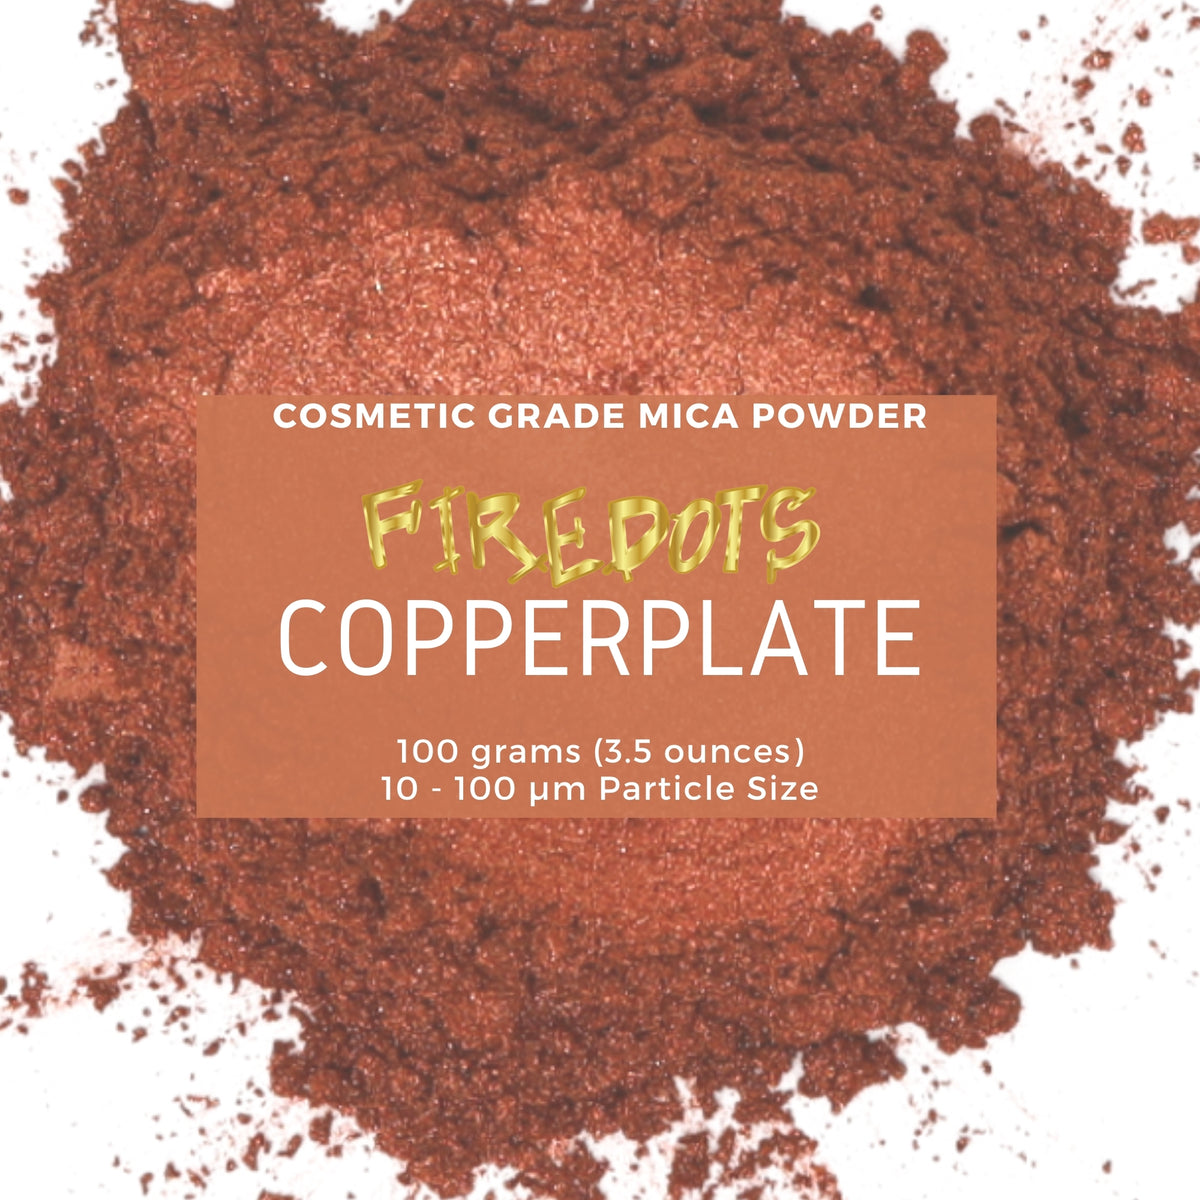 Copperplate Mica Powder – FIREDOTS